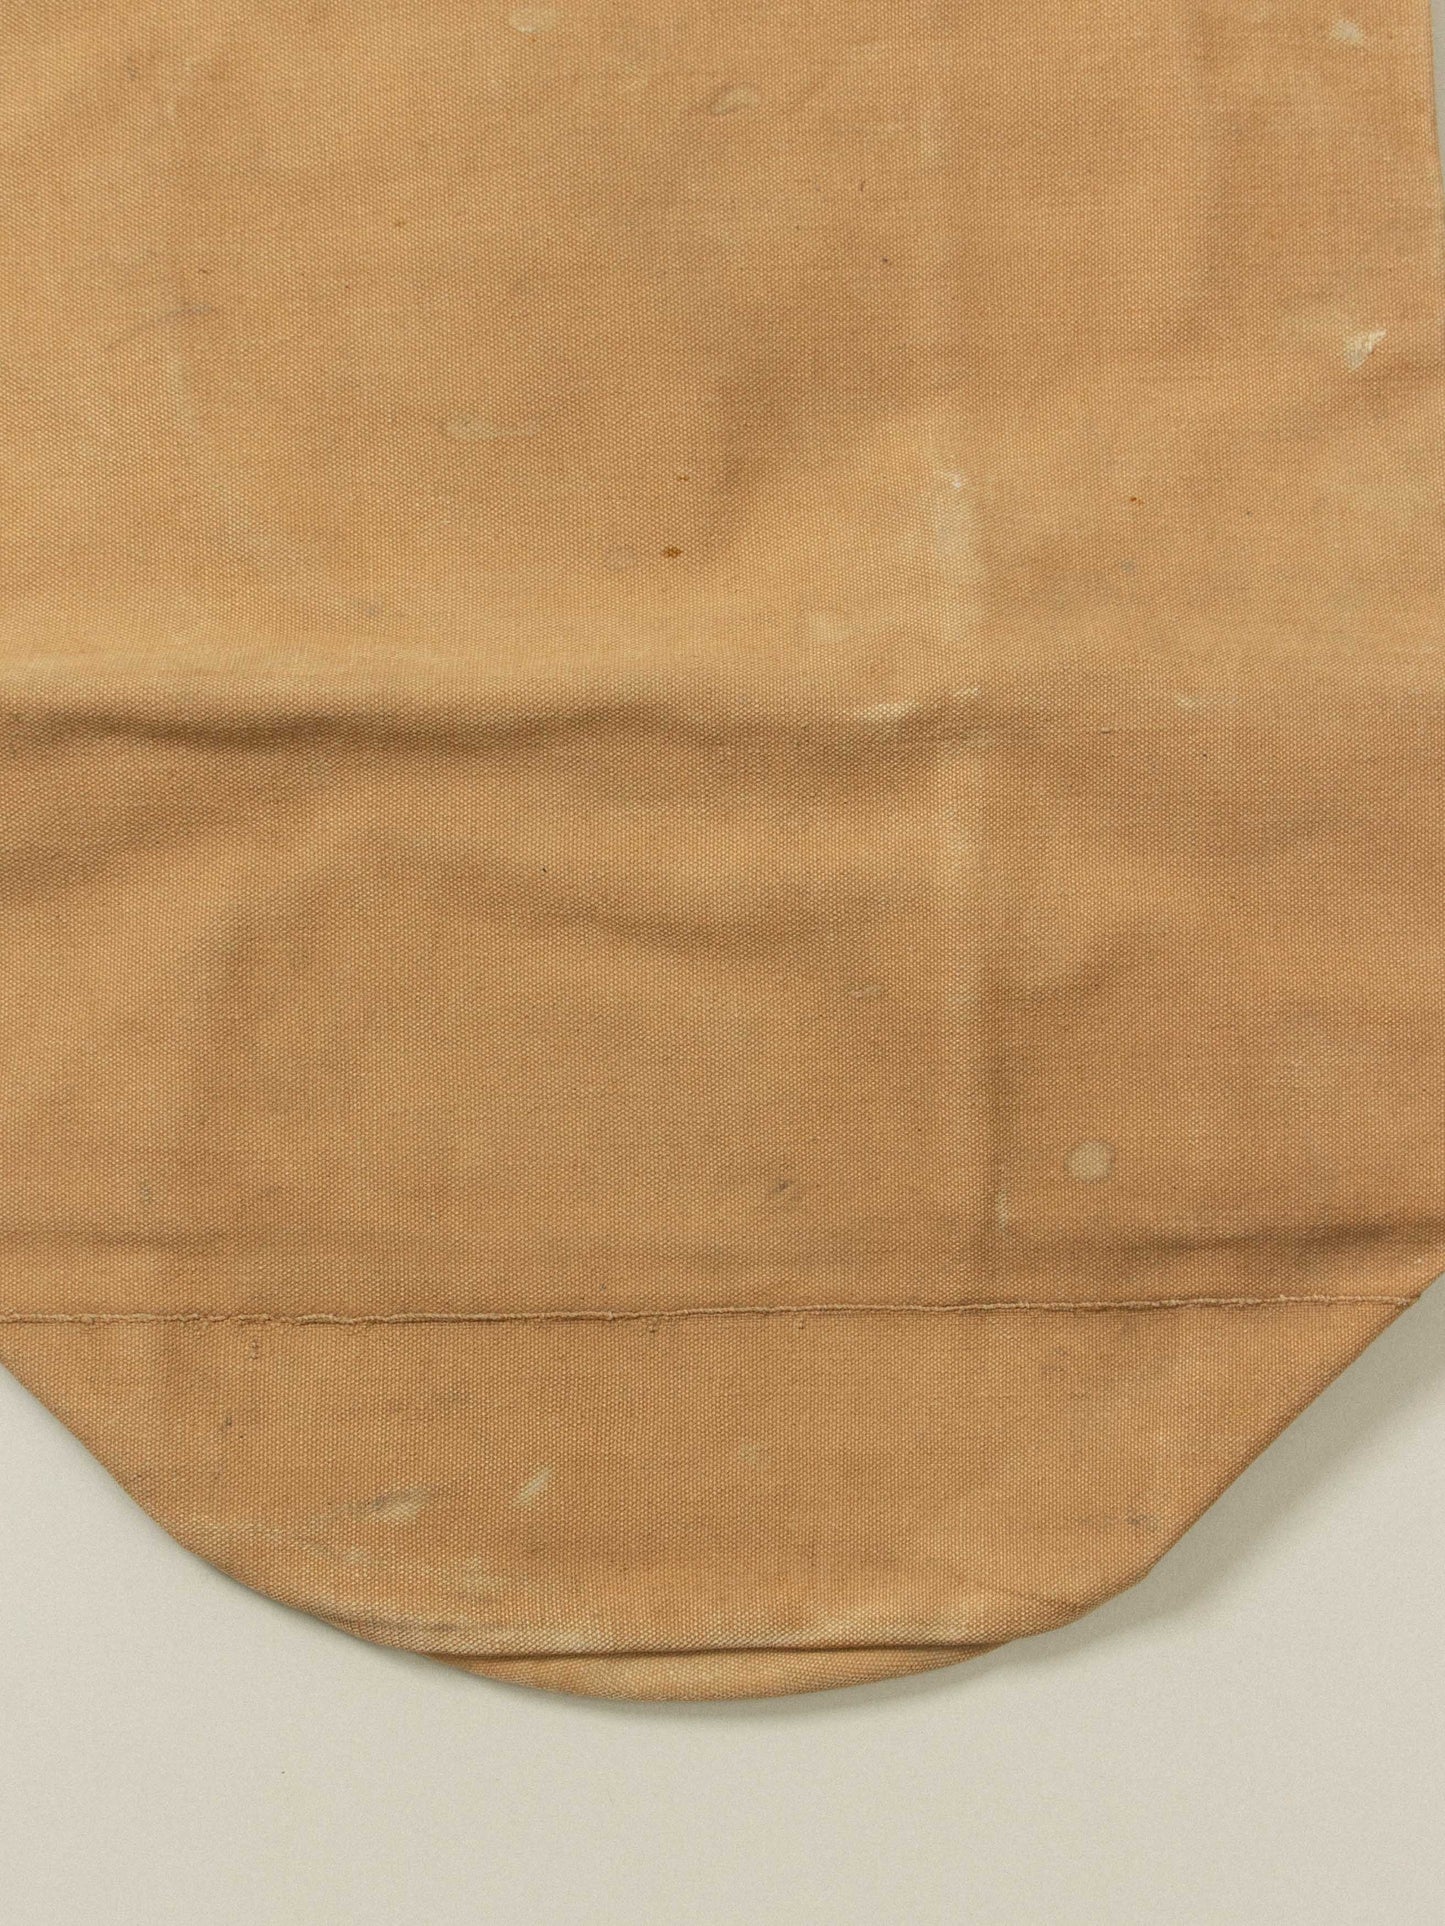 Vtg WWII British RAF Kit Bag